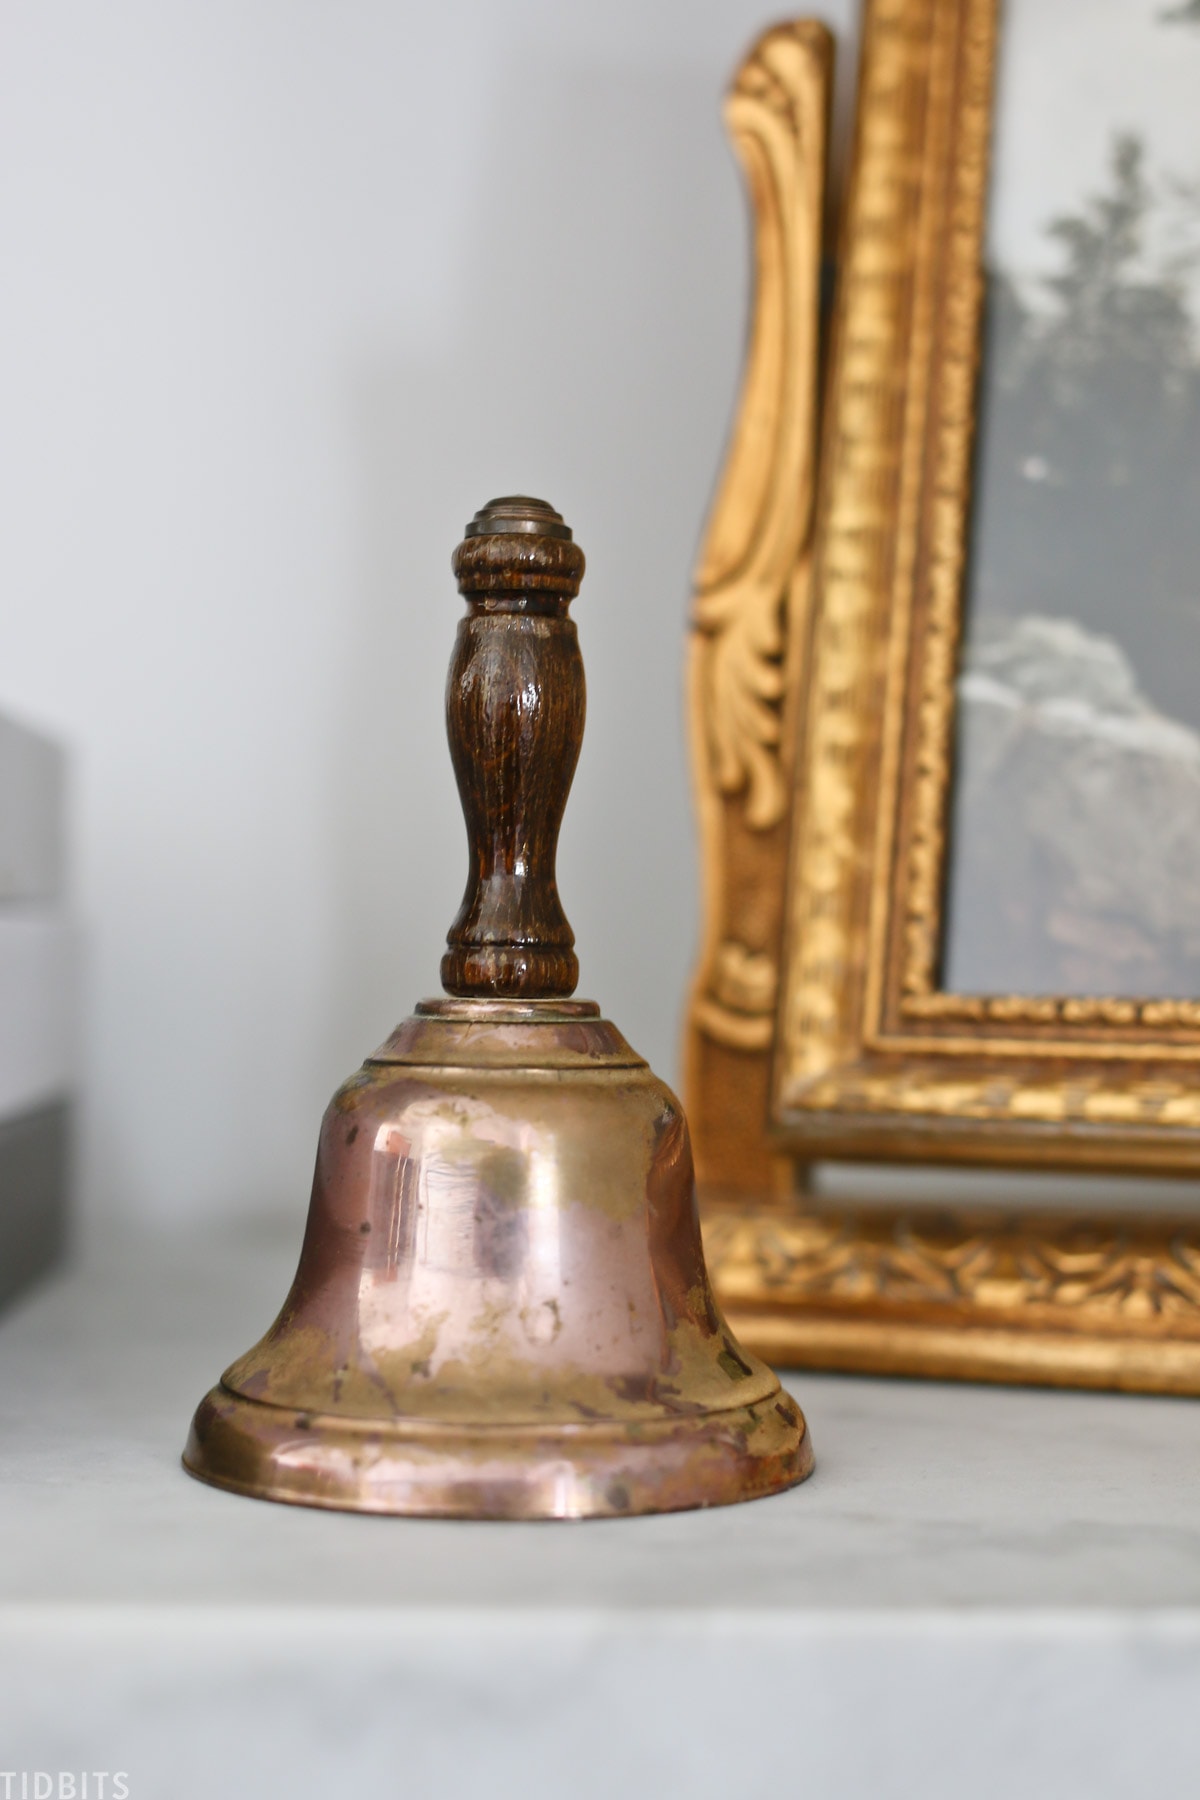 vintage school bell on shelf next to mirror